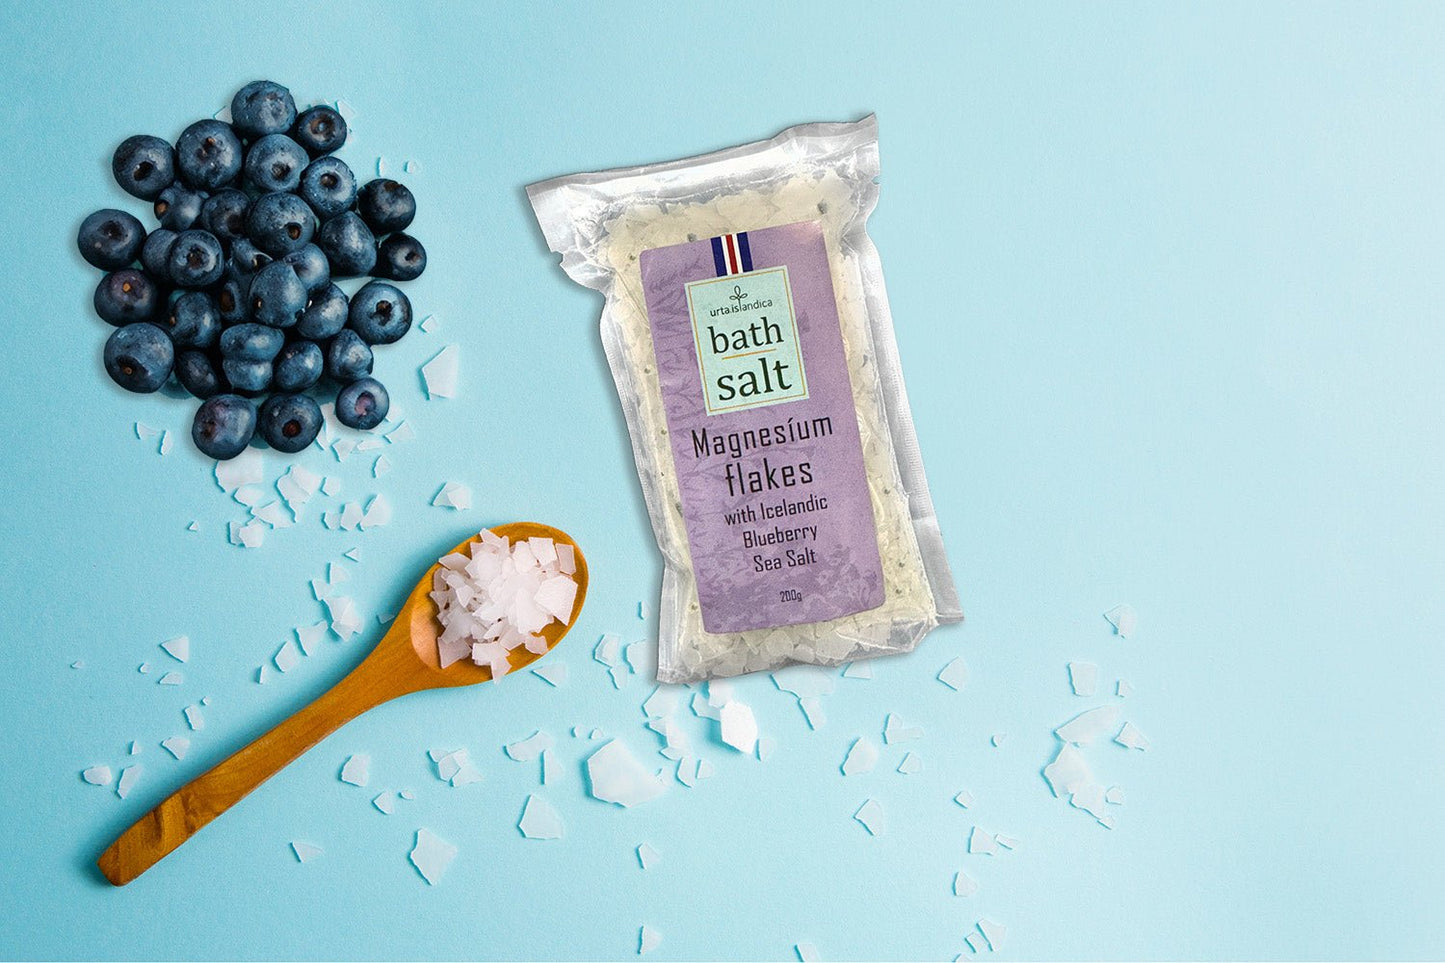 All Natural Magnesium Bath Salt w/ Icelandic Blueberry Sea Salt - Nordic Catch